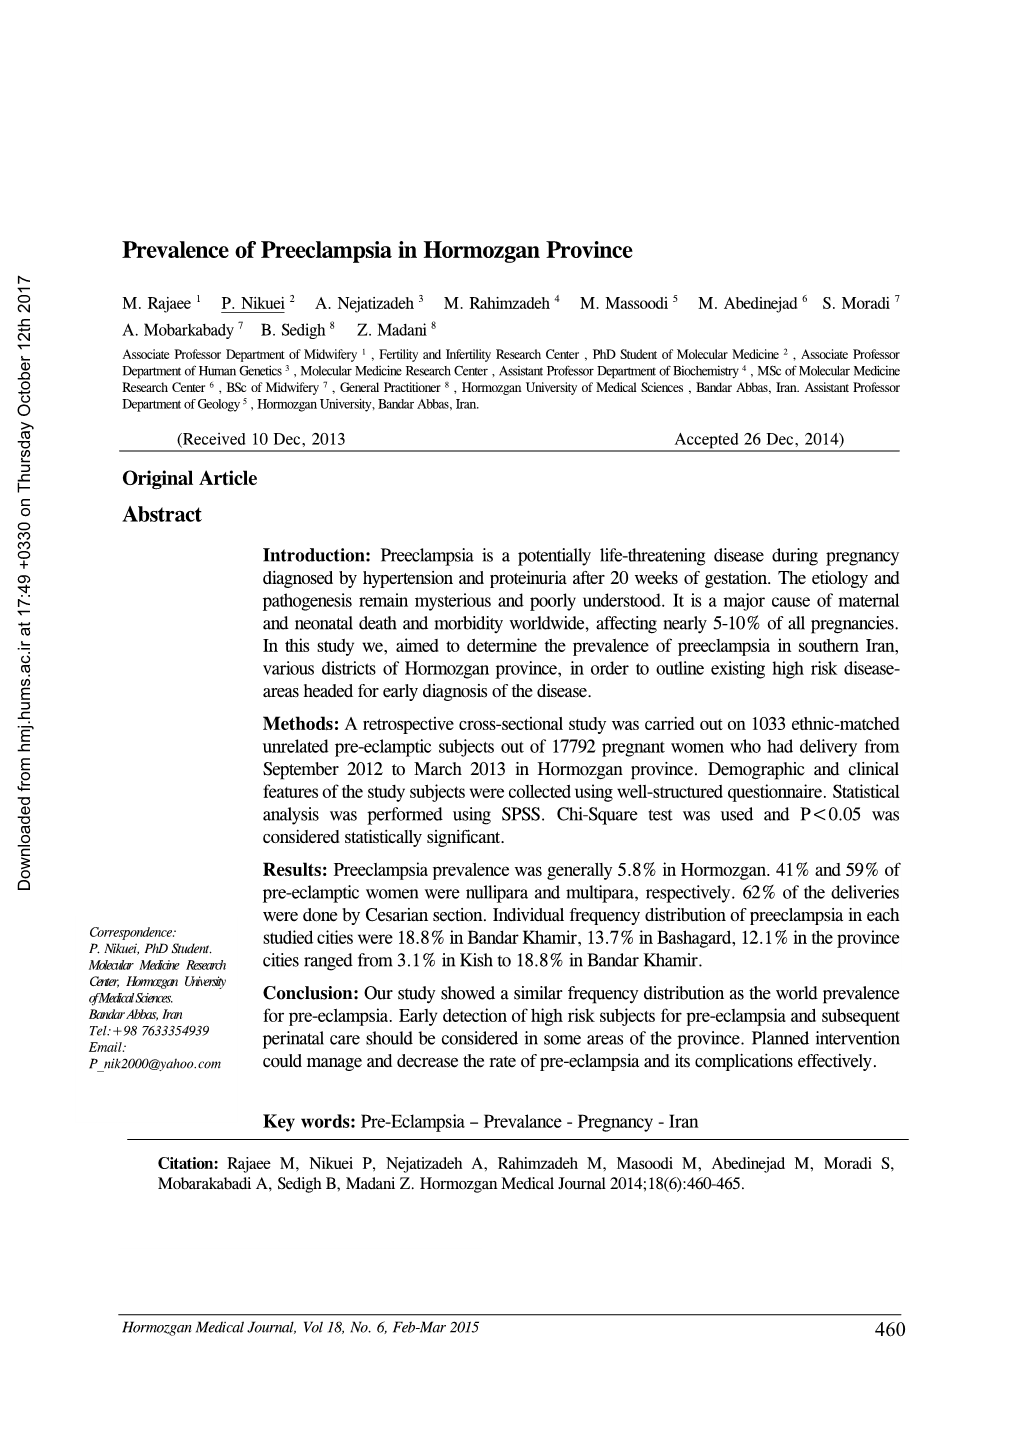 Prevalence of Preeclampsia in Hormozgan Province